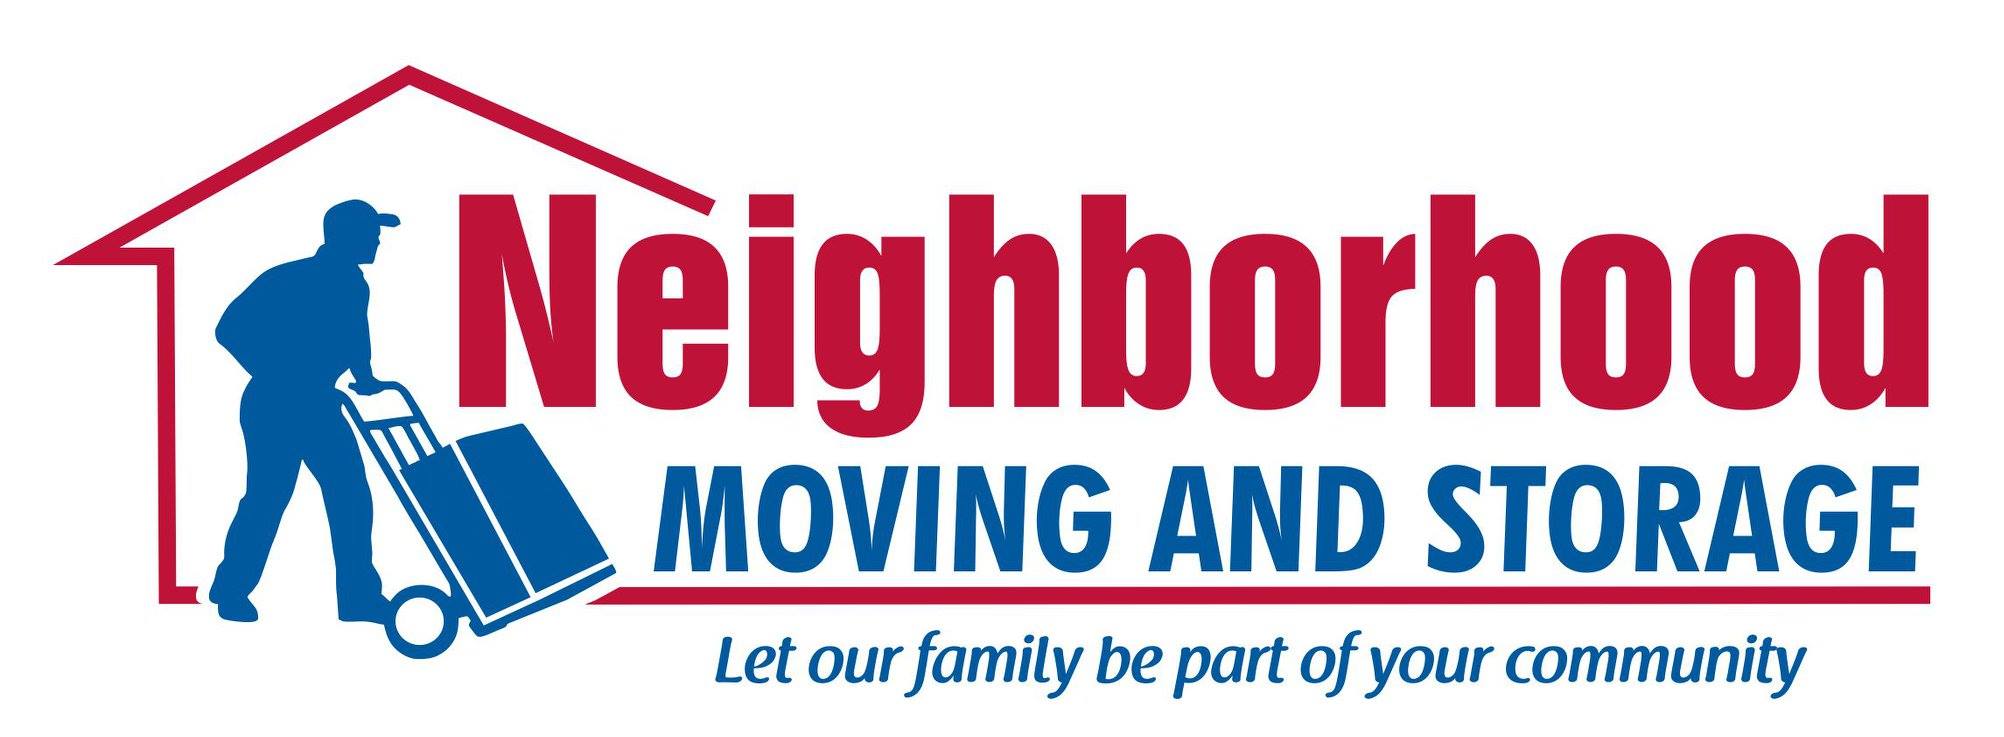 Neighborhood Moving and Storage's Logo